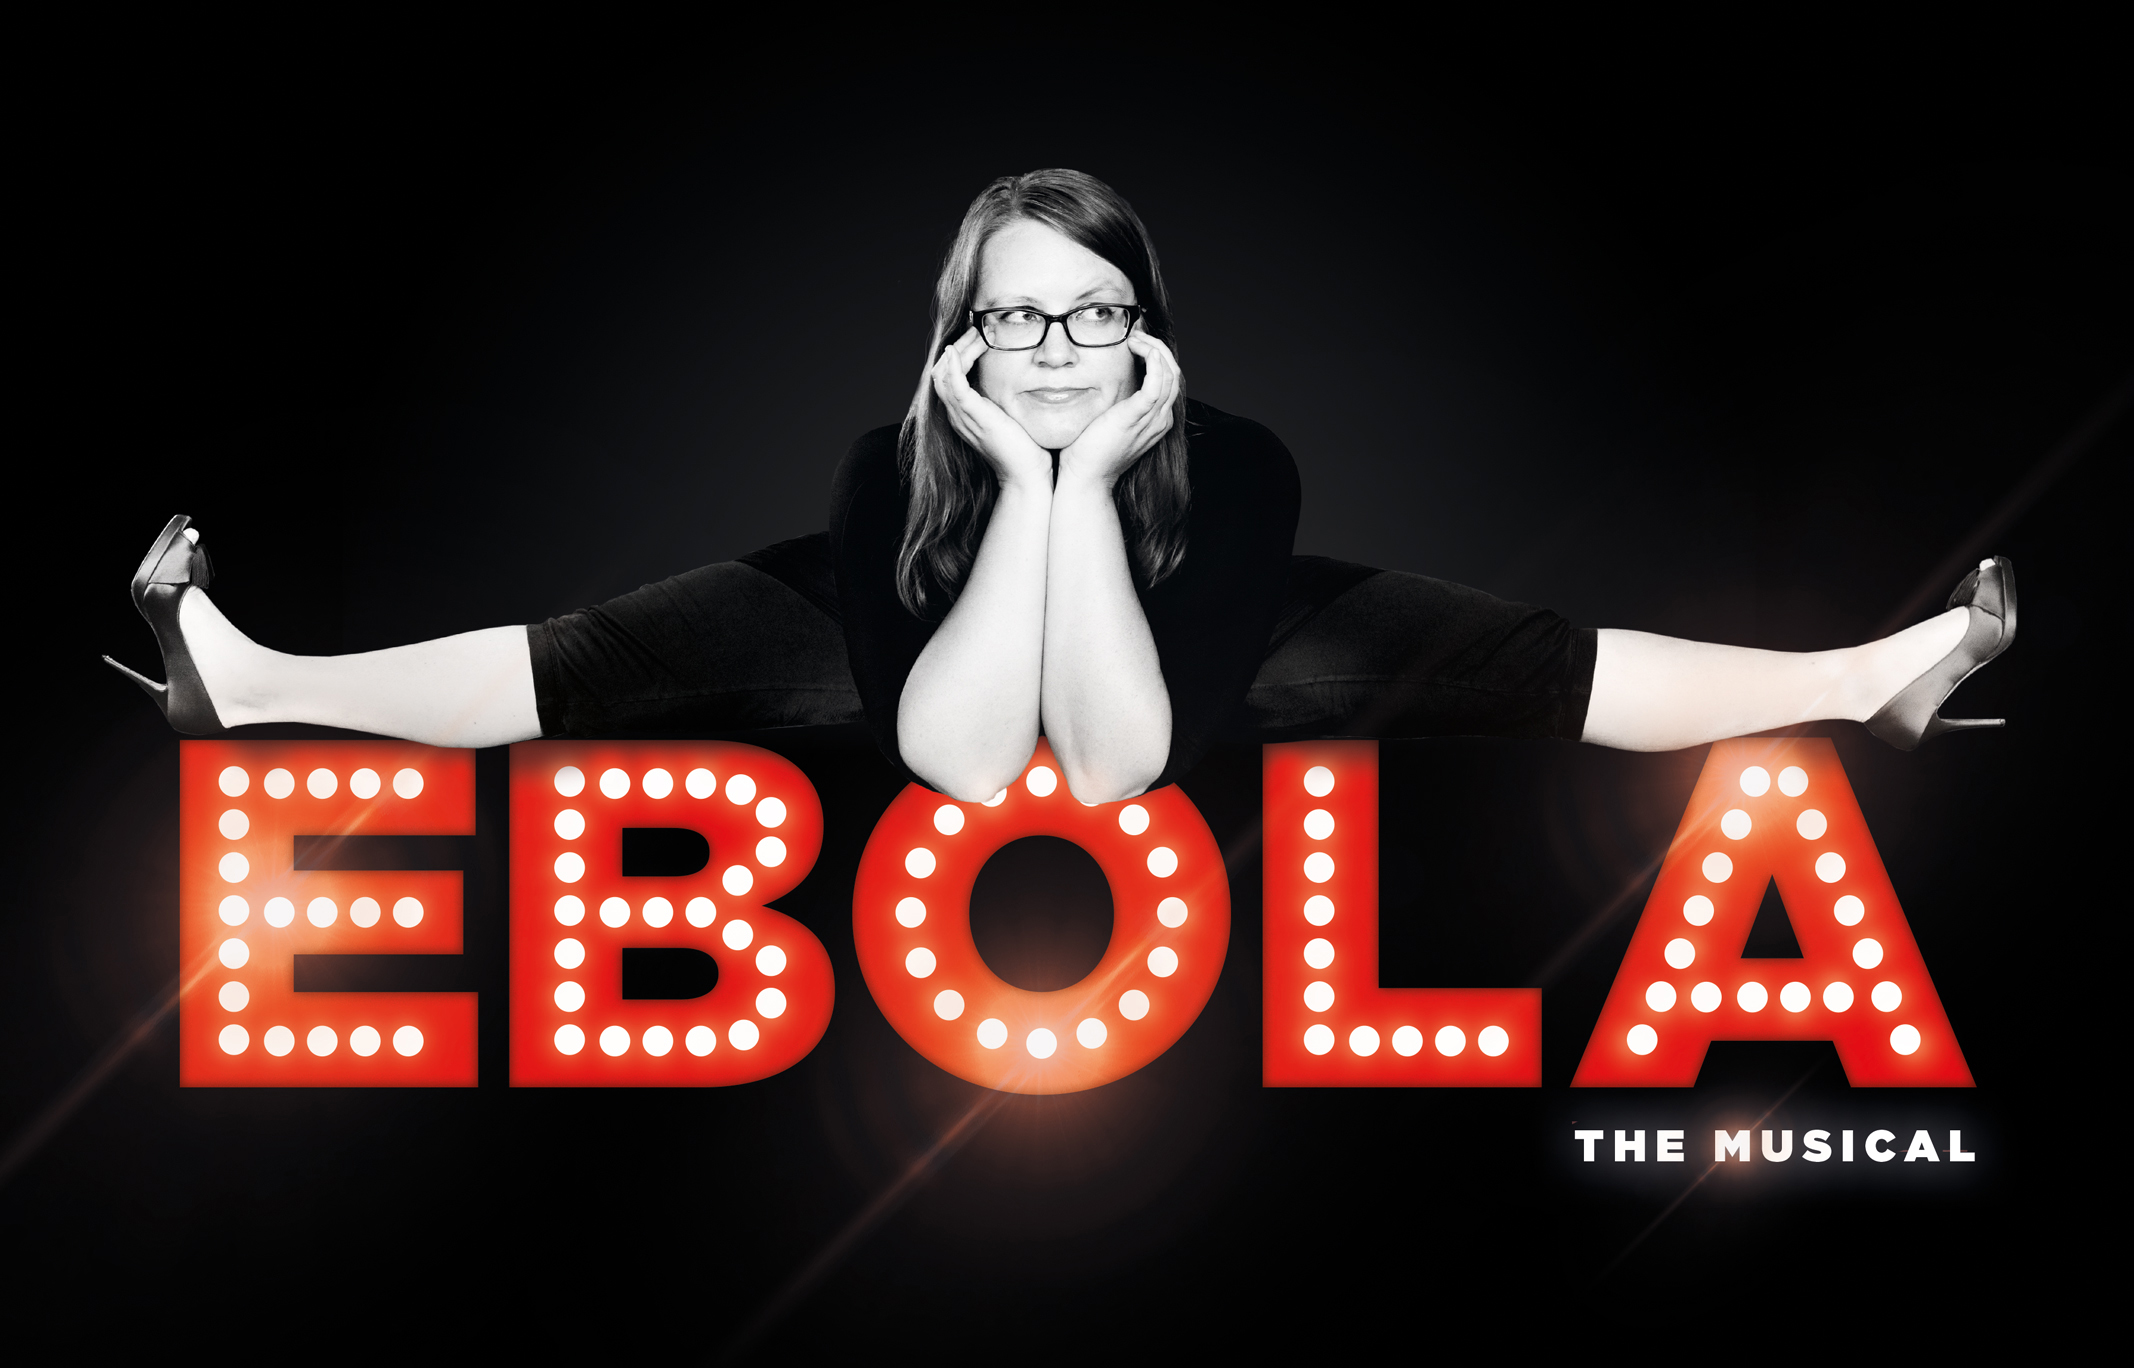 Ebola the Musical